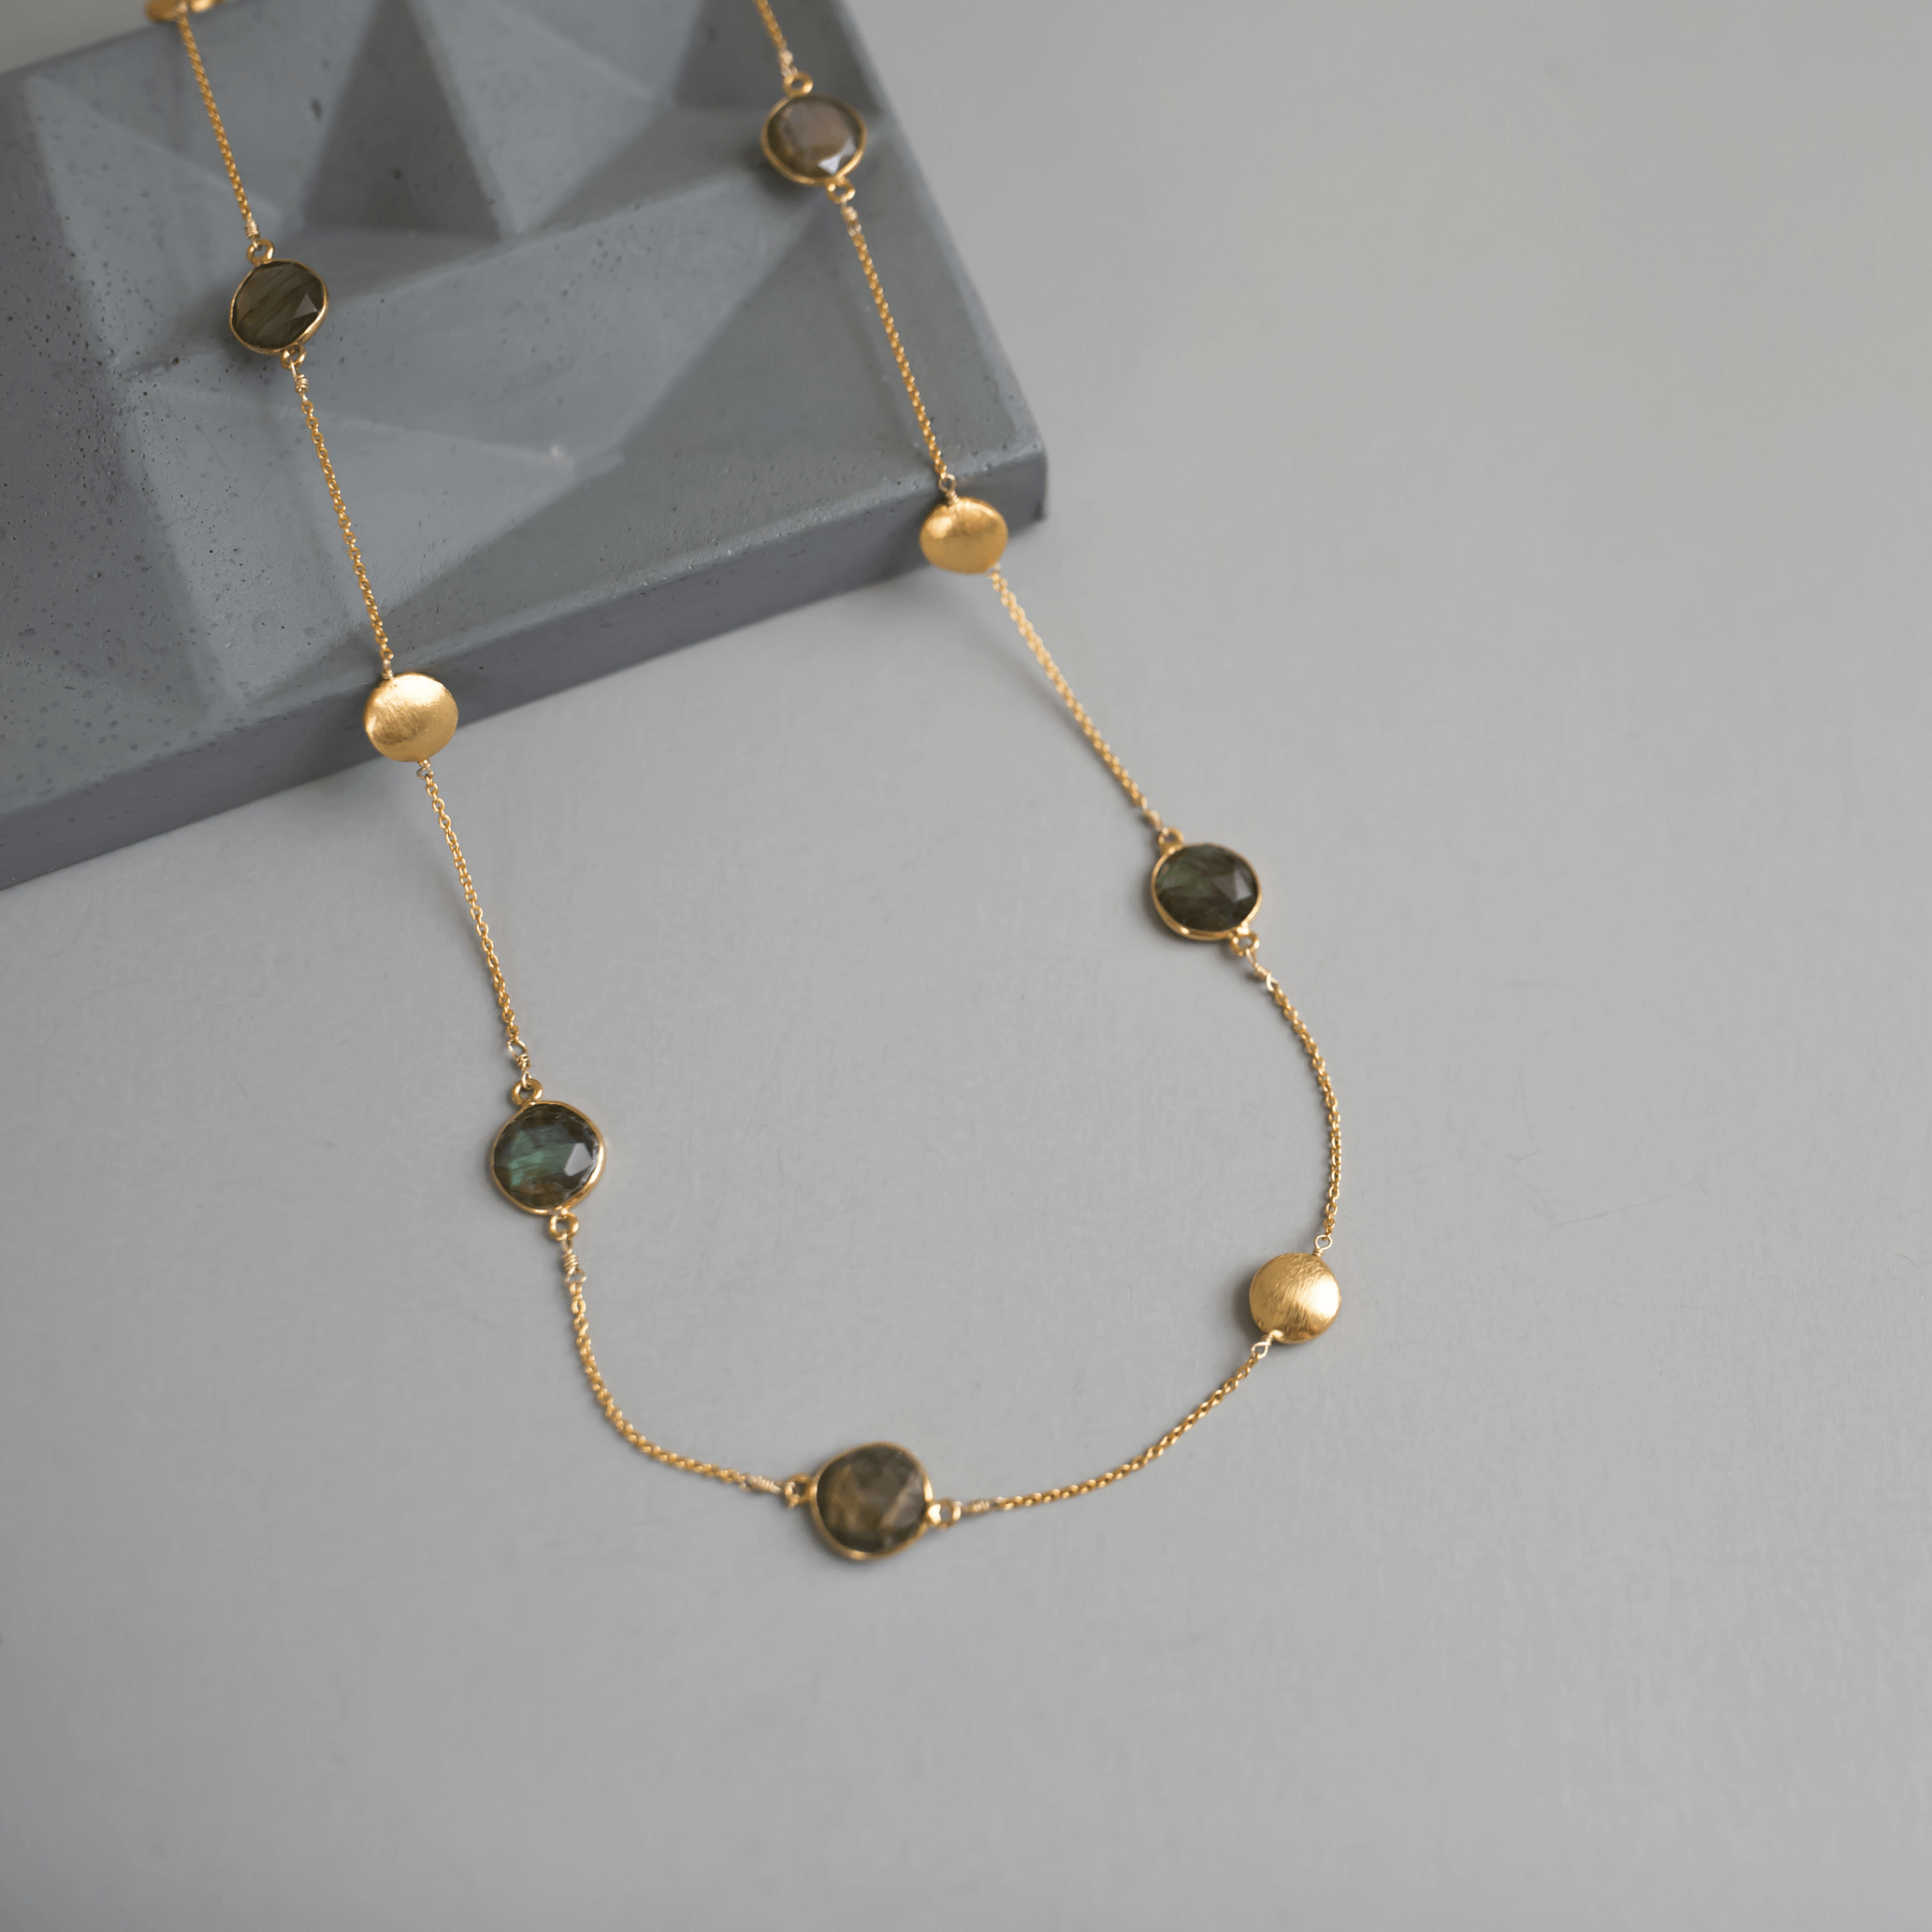 Unique Gold with Versatile Labradorite gemstones Long Chain